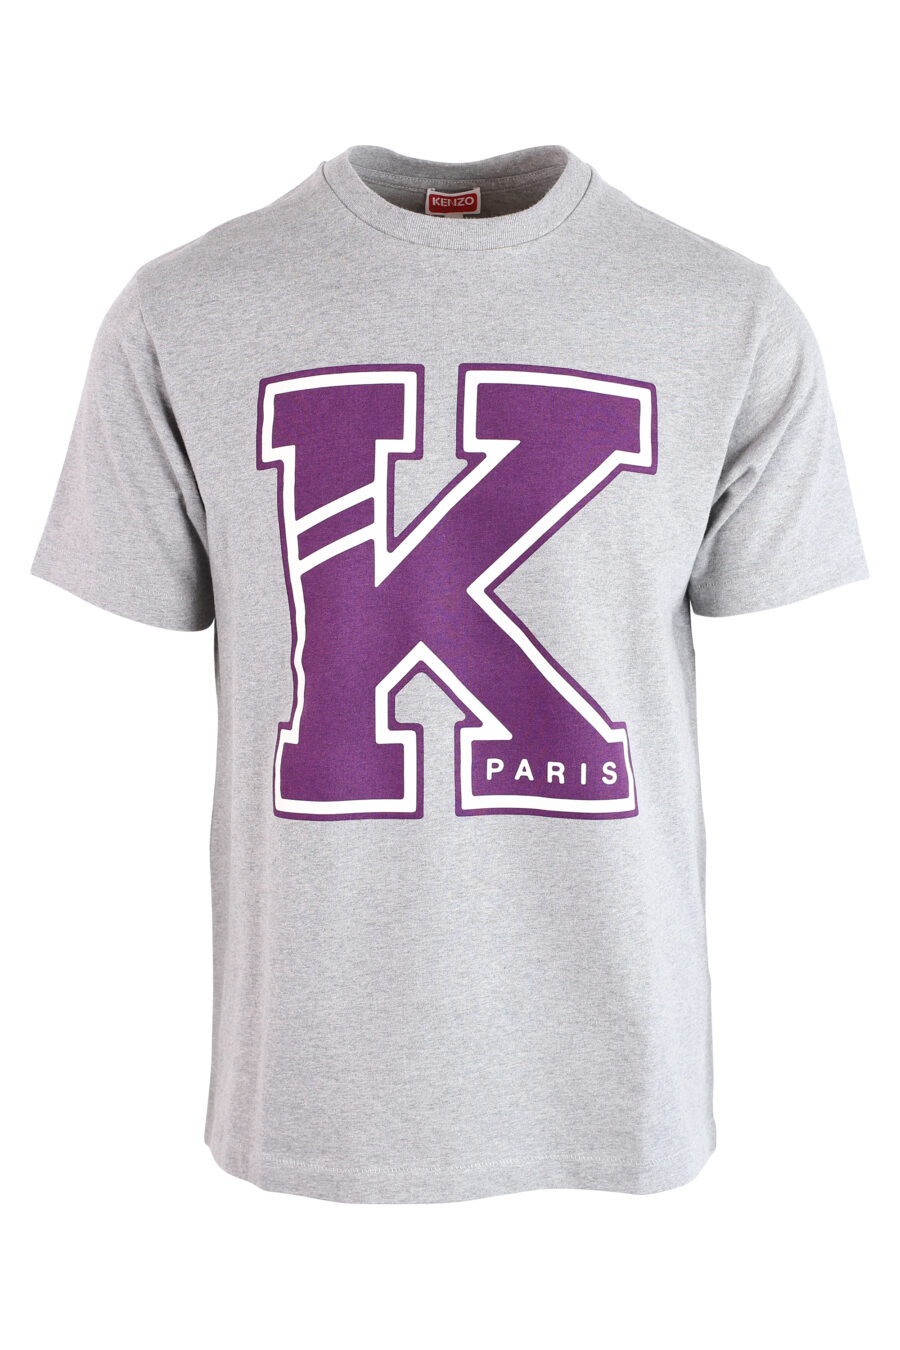 T-shirt gris avec maxillogramme "K" violet - IMG 3195